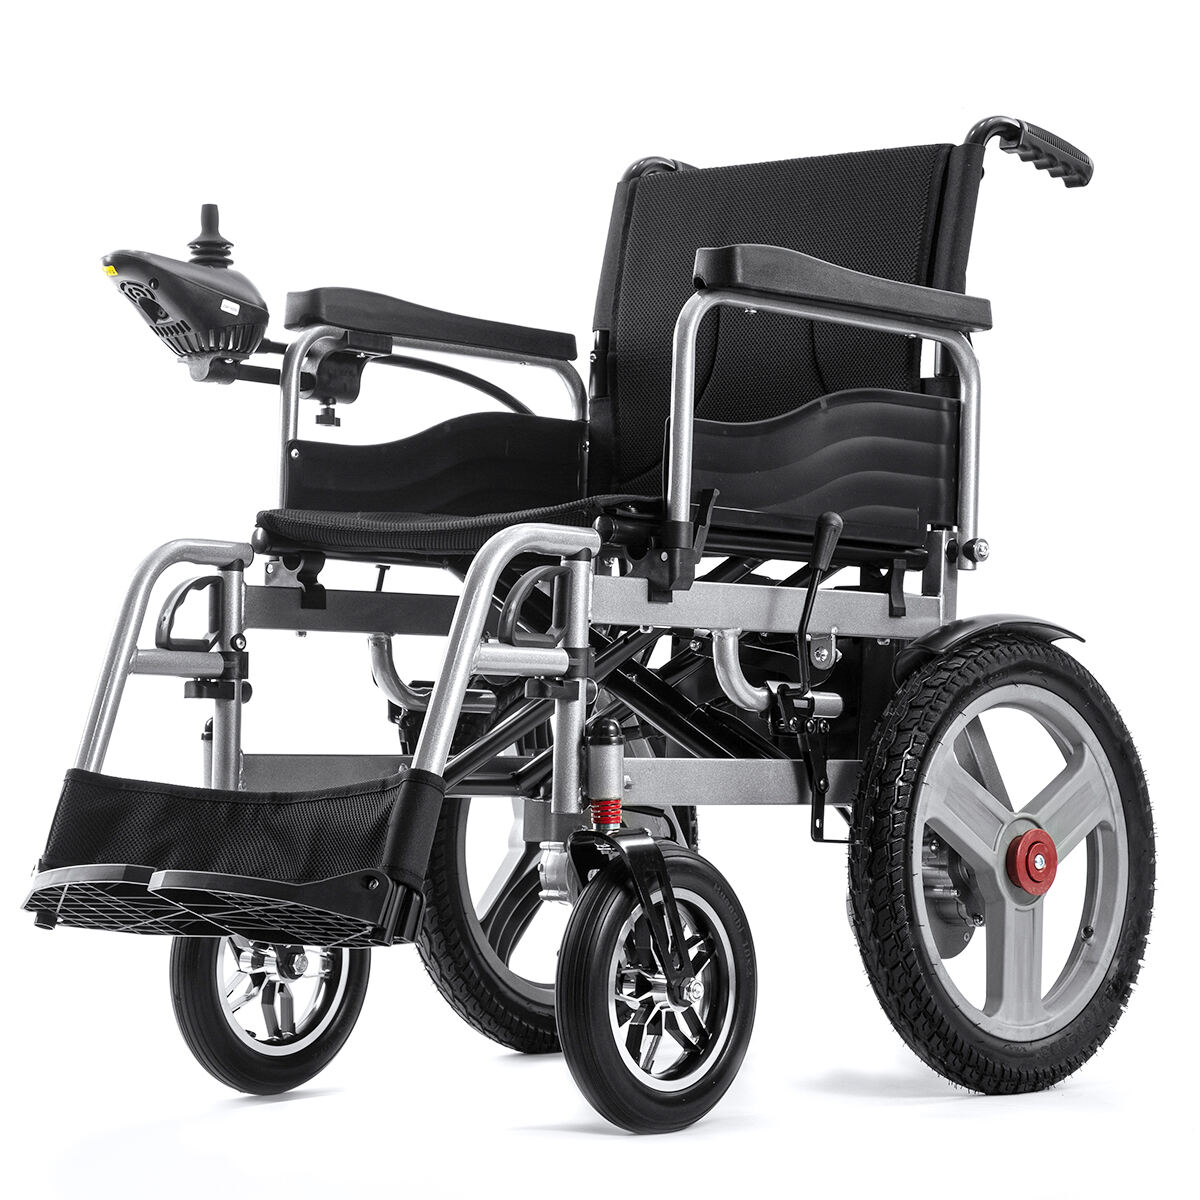 BC-ES6001A-LW كرسي متحرك كهربائي أوتوماتيكي رخيص الثمن للبالغين